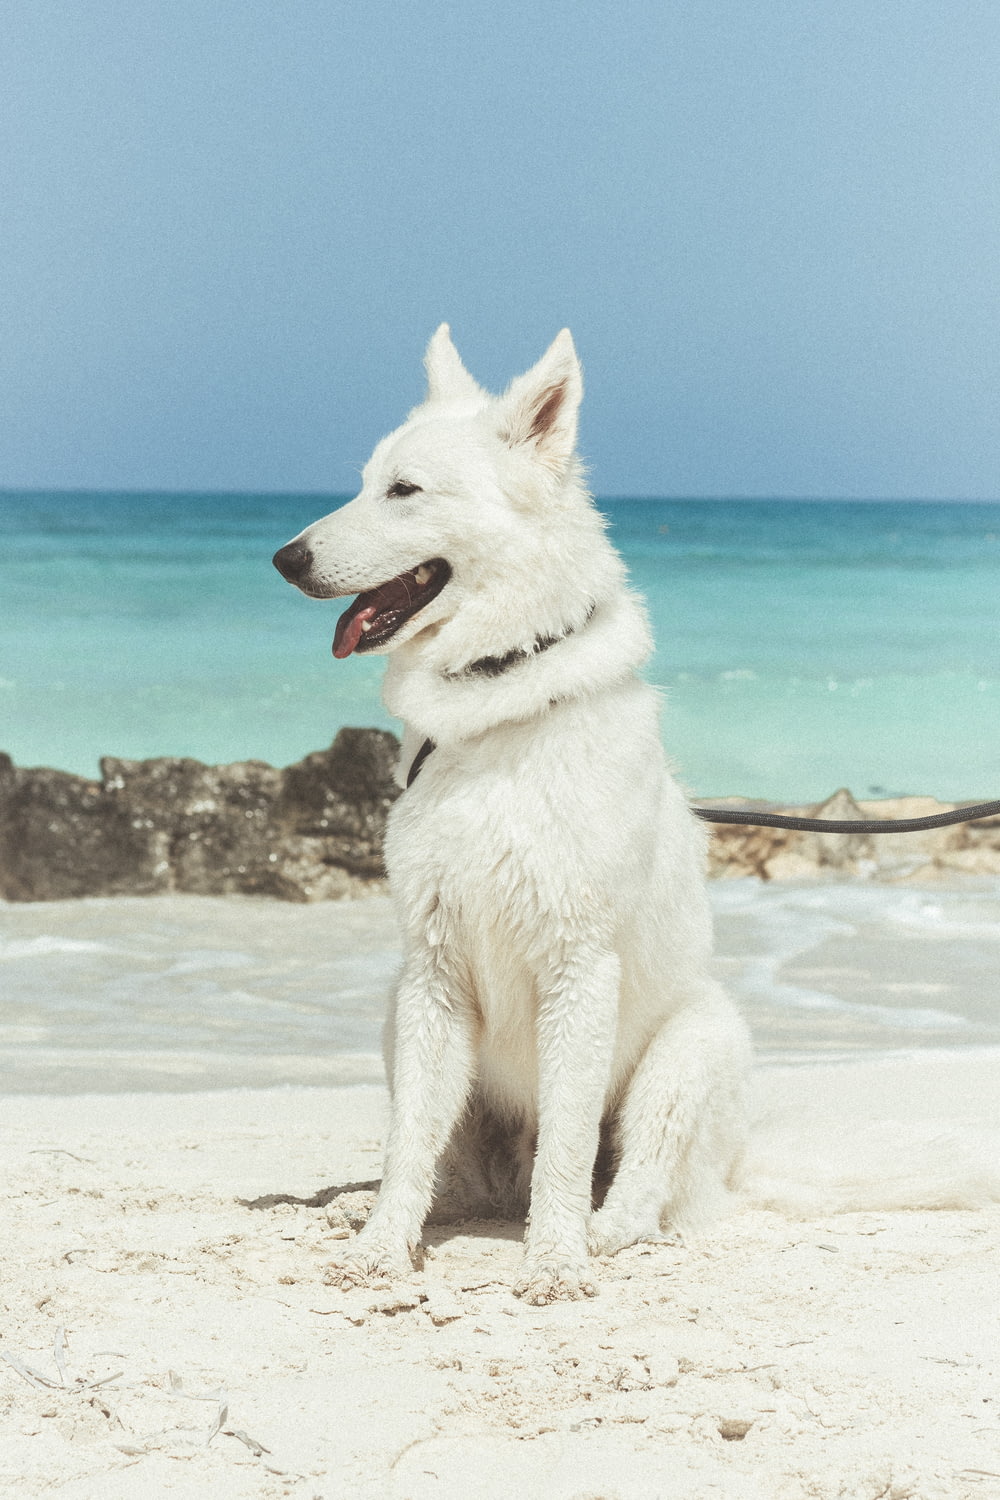 a white dog sitting on a sandy beach